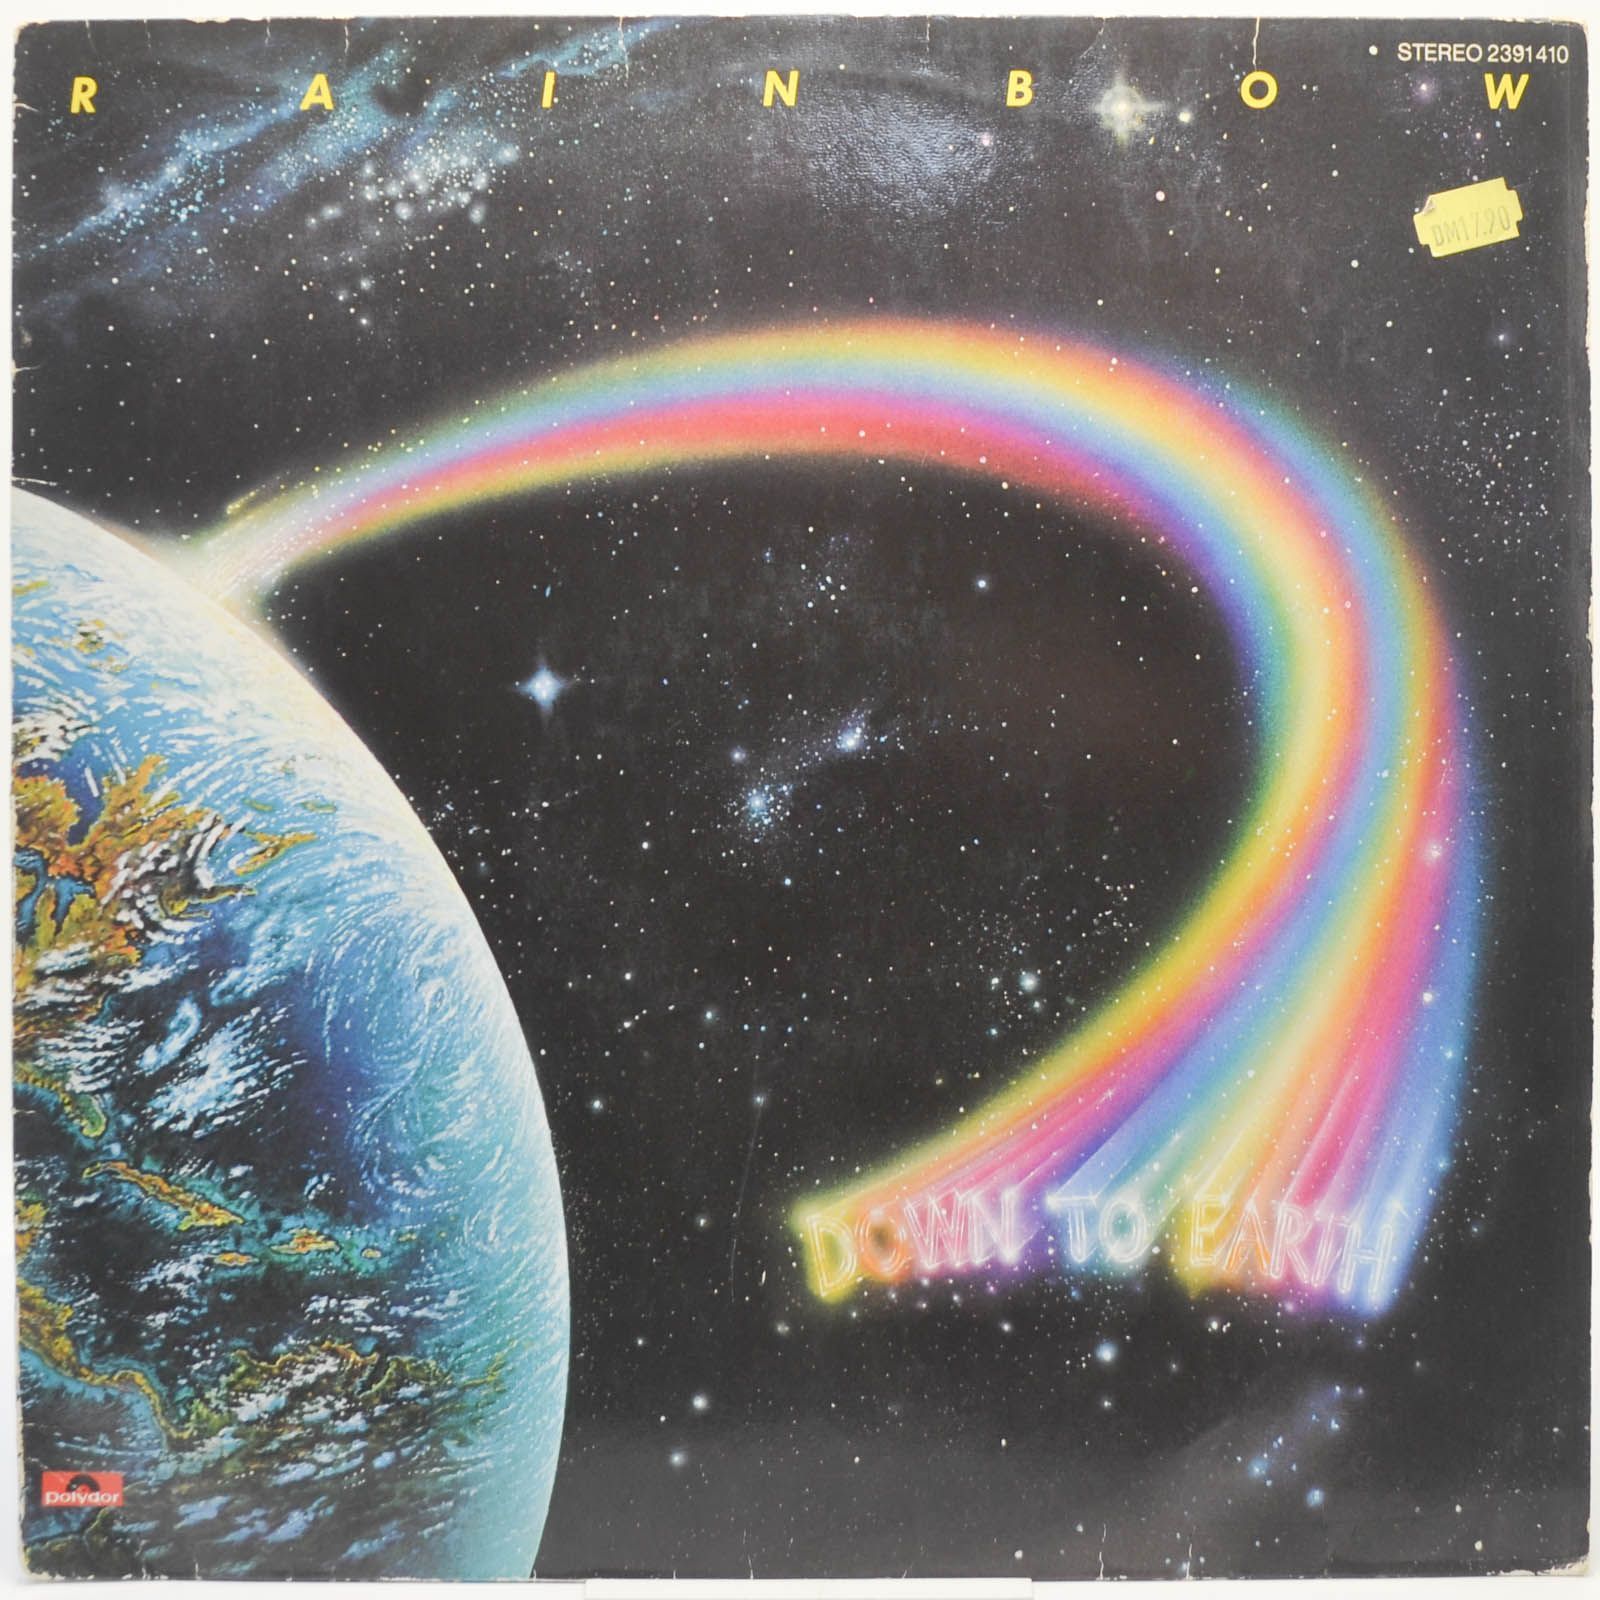 Rainbow — Down To Earth, 1979